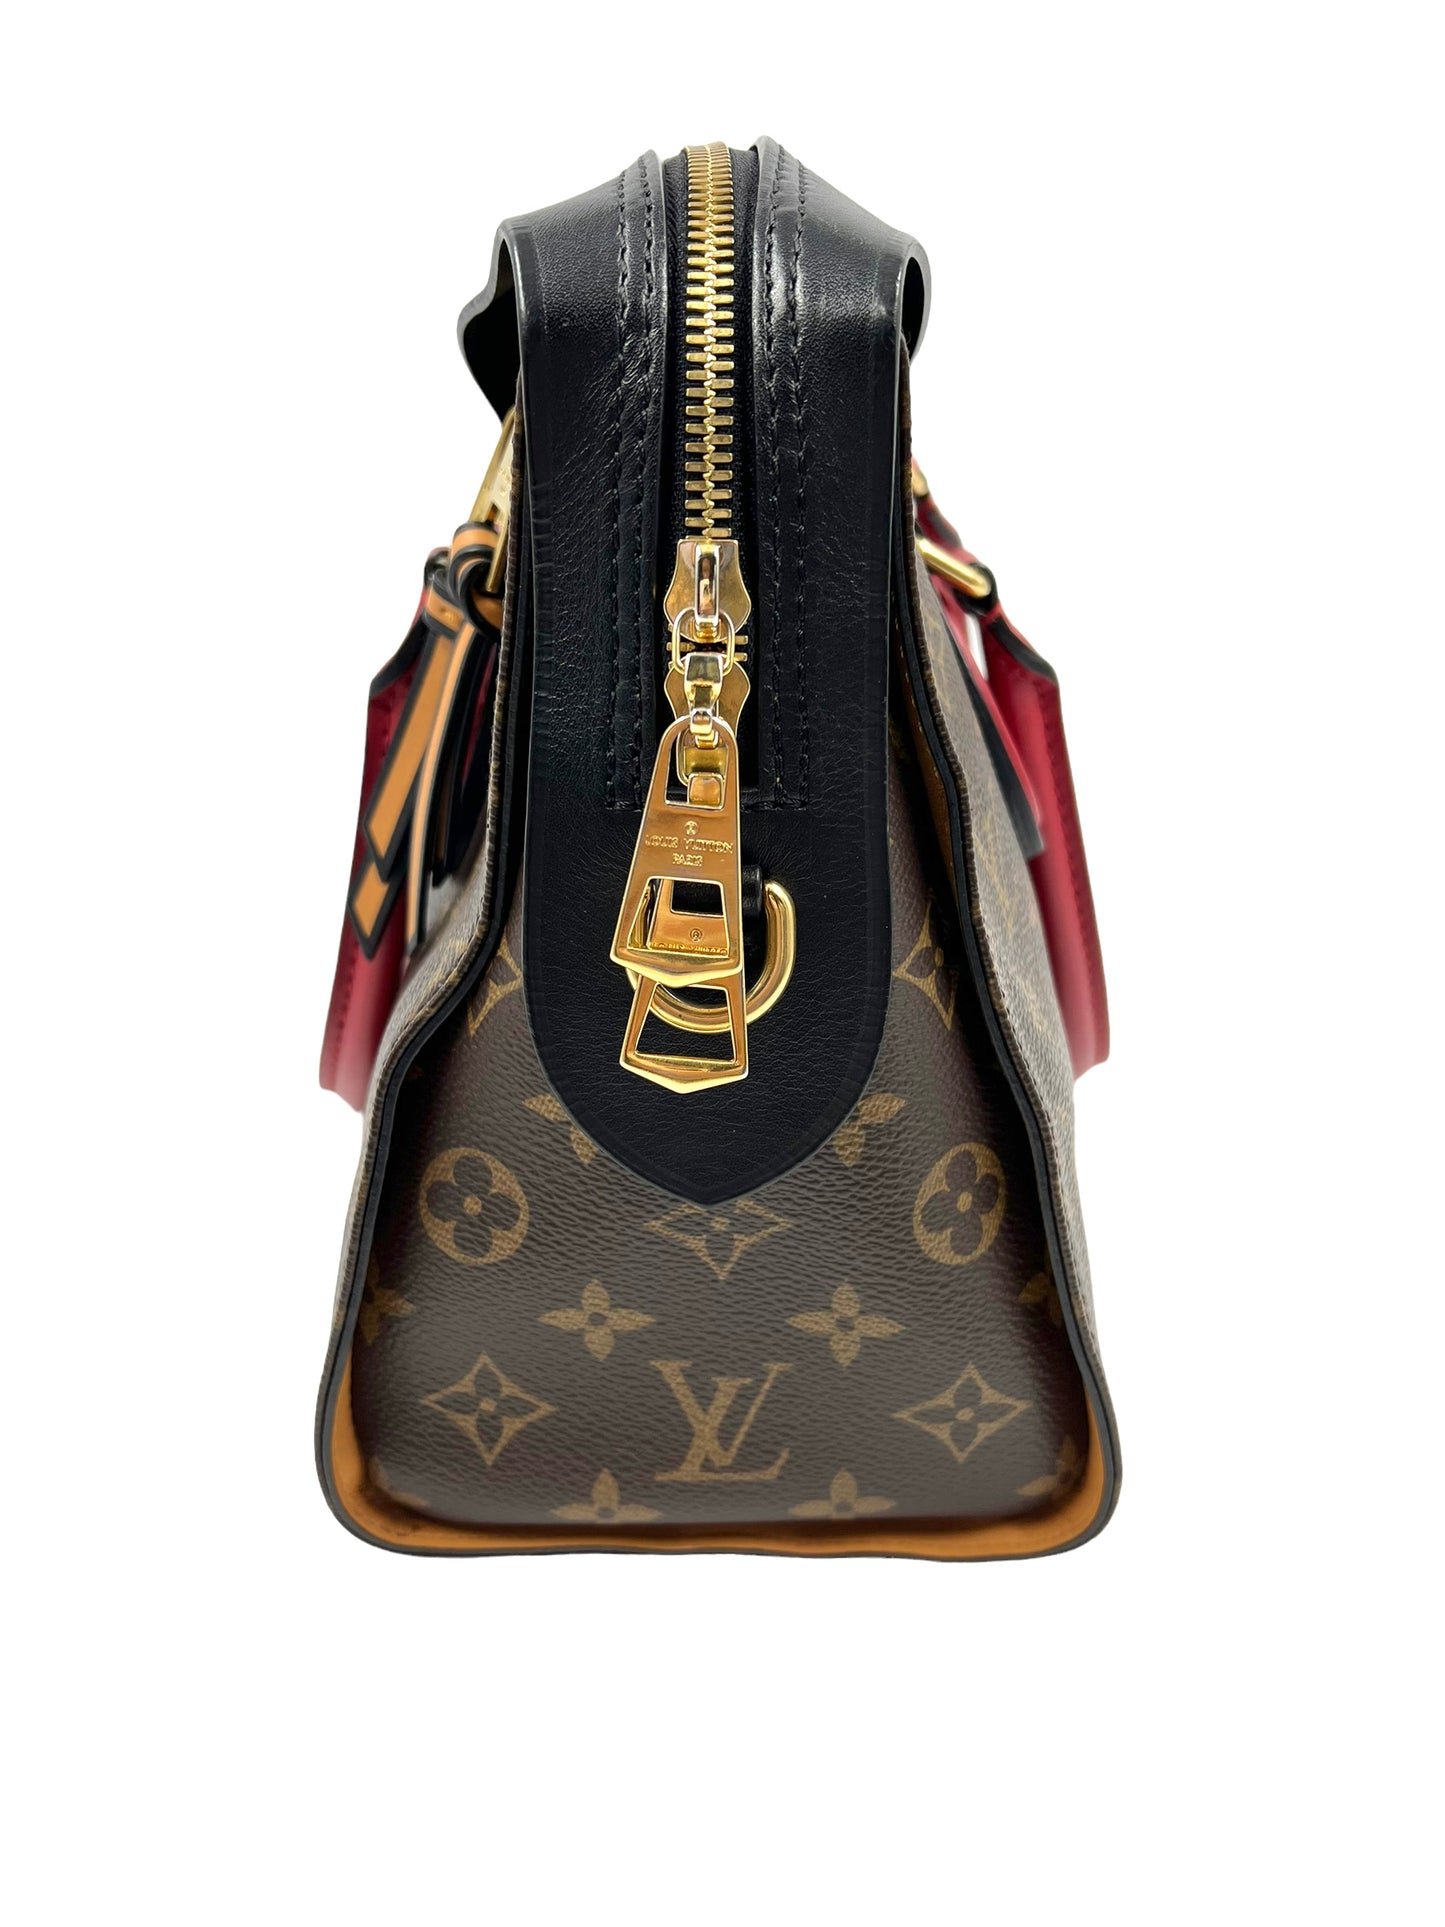 Louis Vuitton Monogram Tuileries Handbag